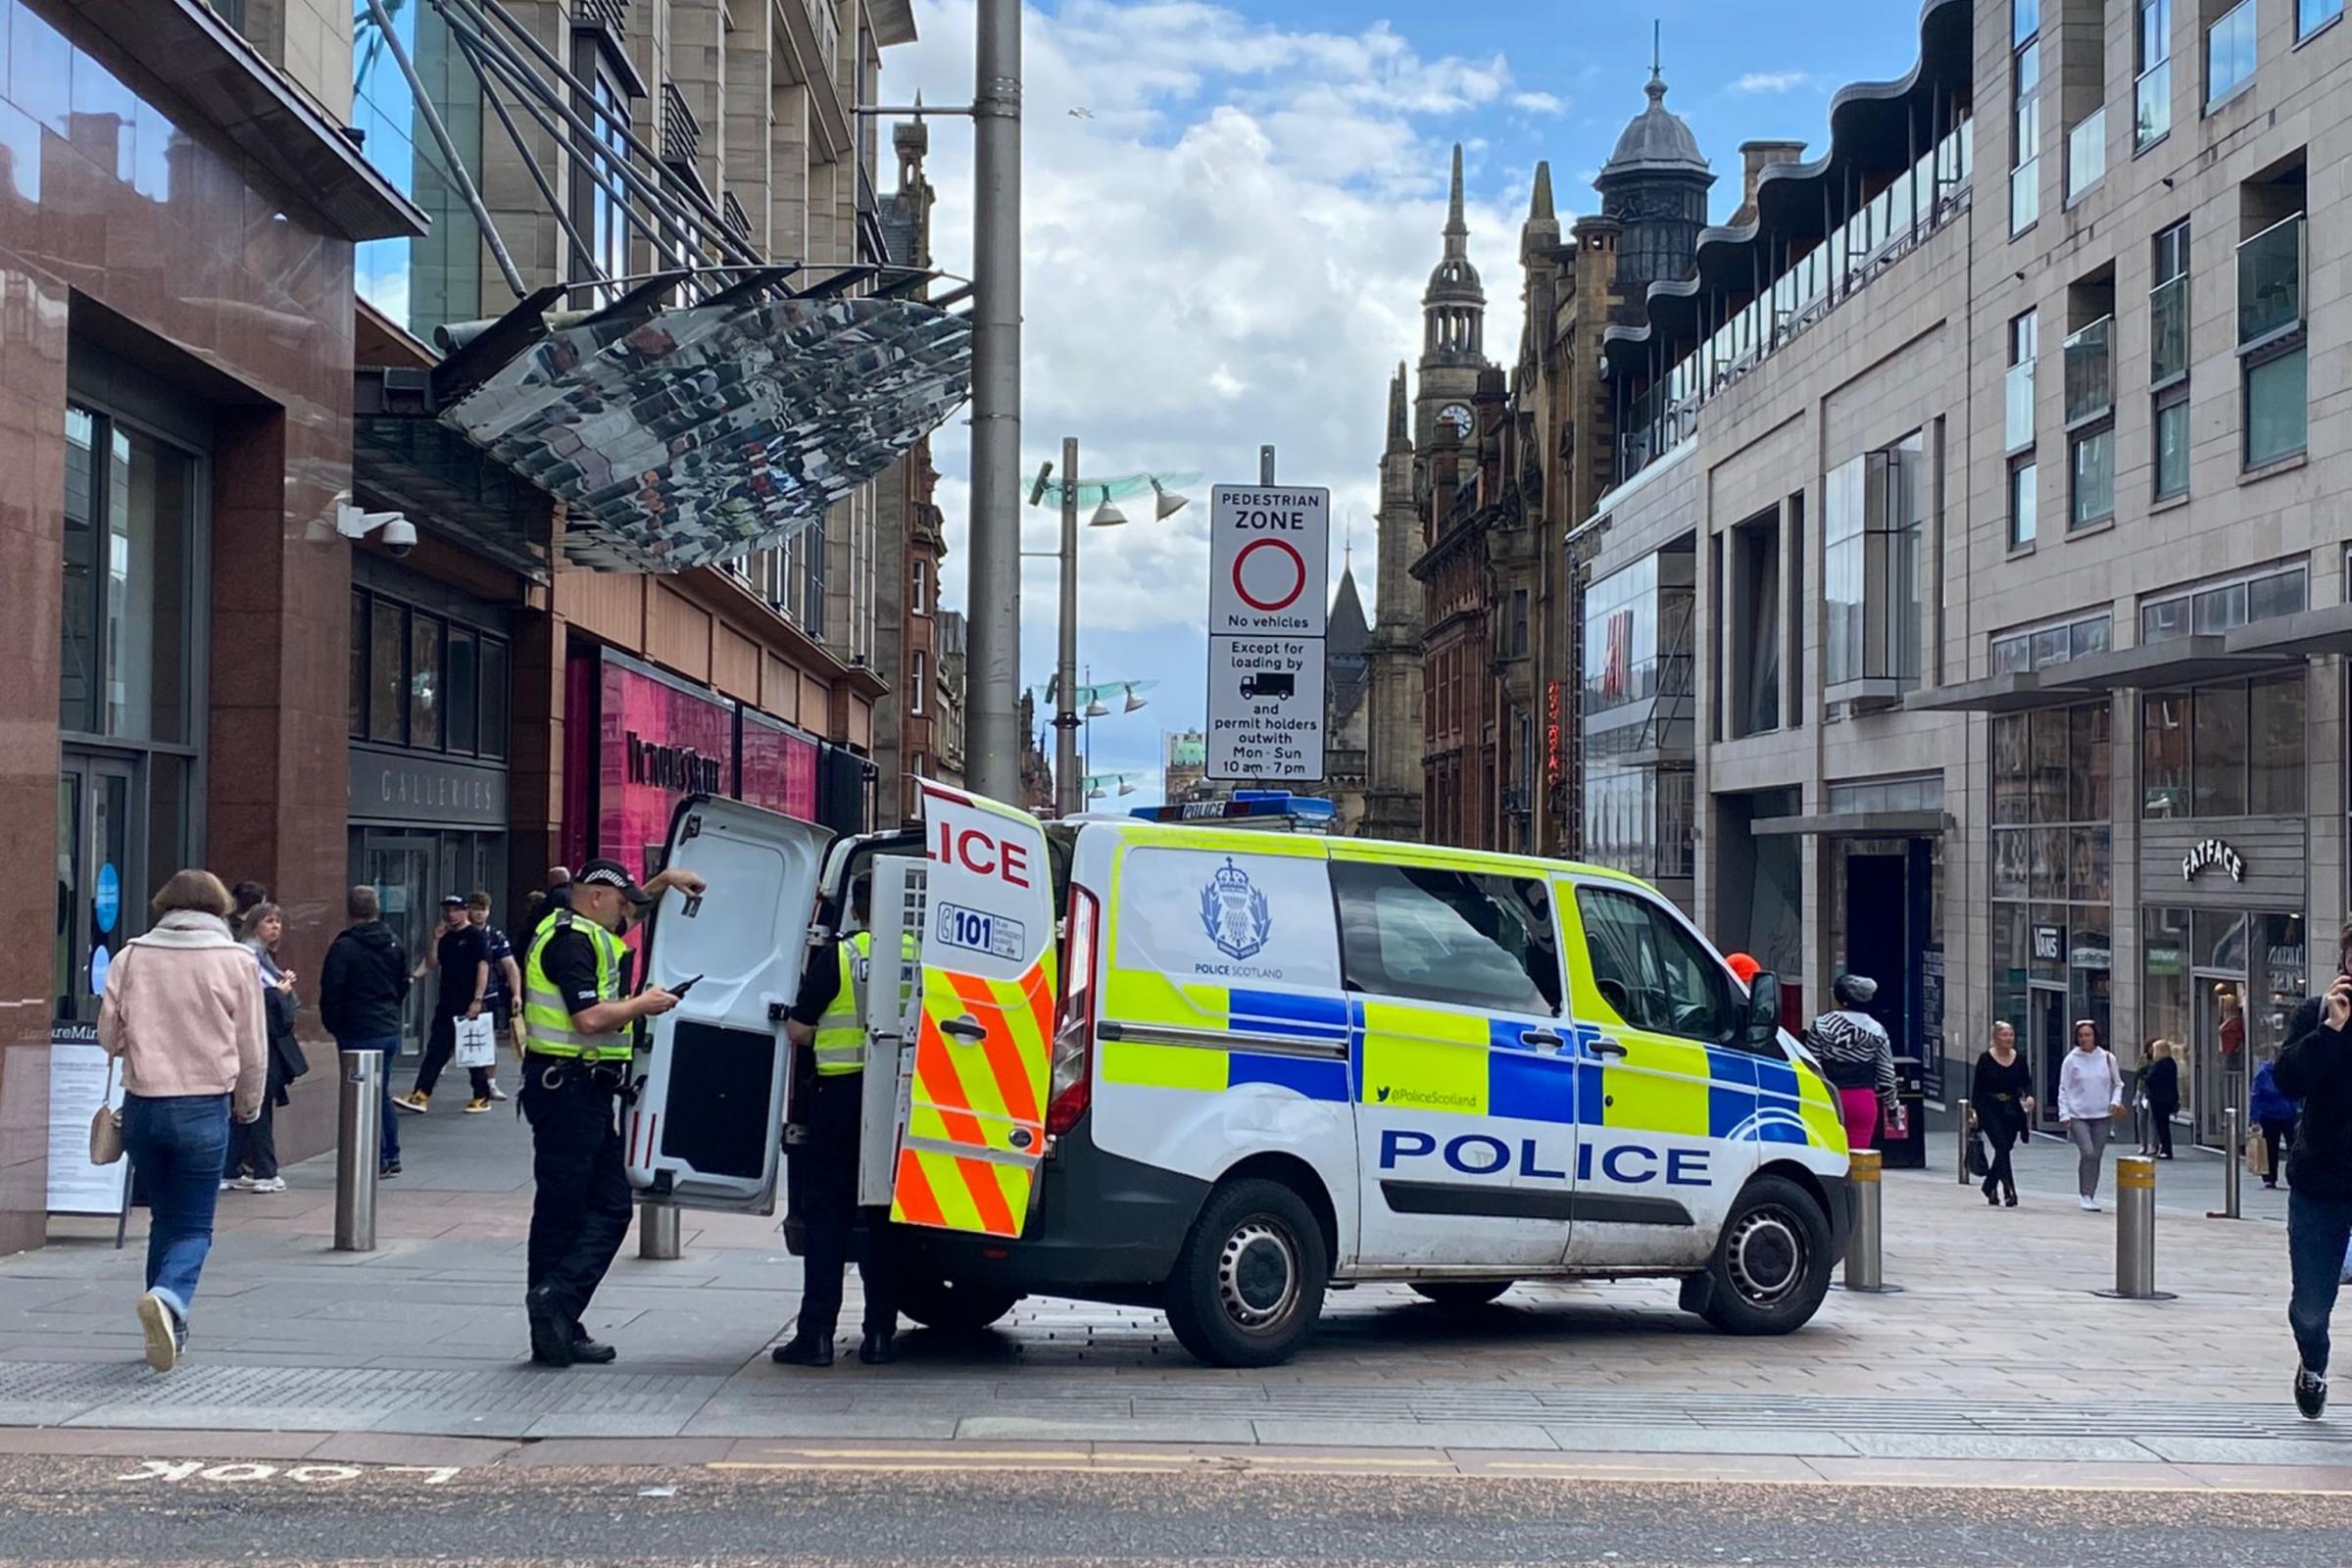 Police presence on Glasgow's Buchanan Street amid ongoing incident